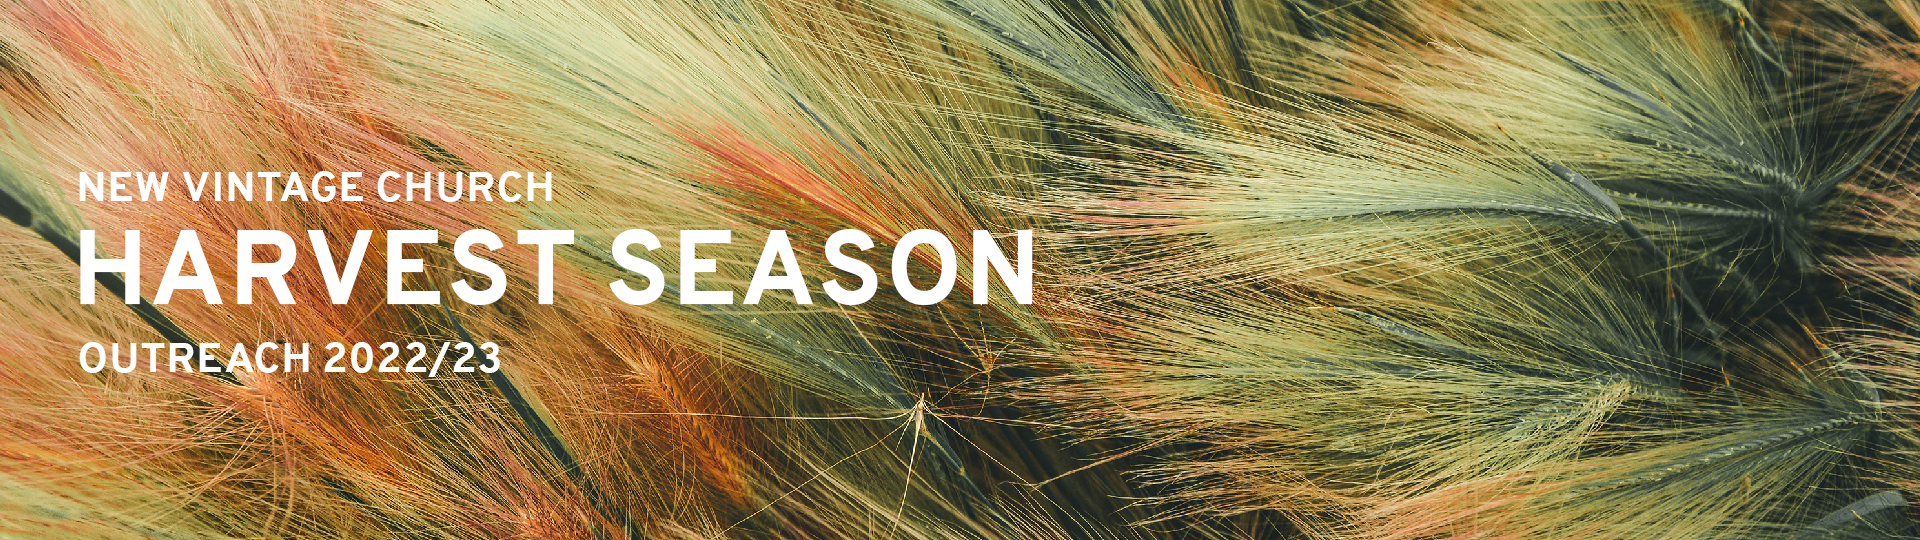 harvest season web banner 2